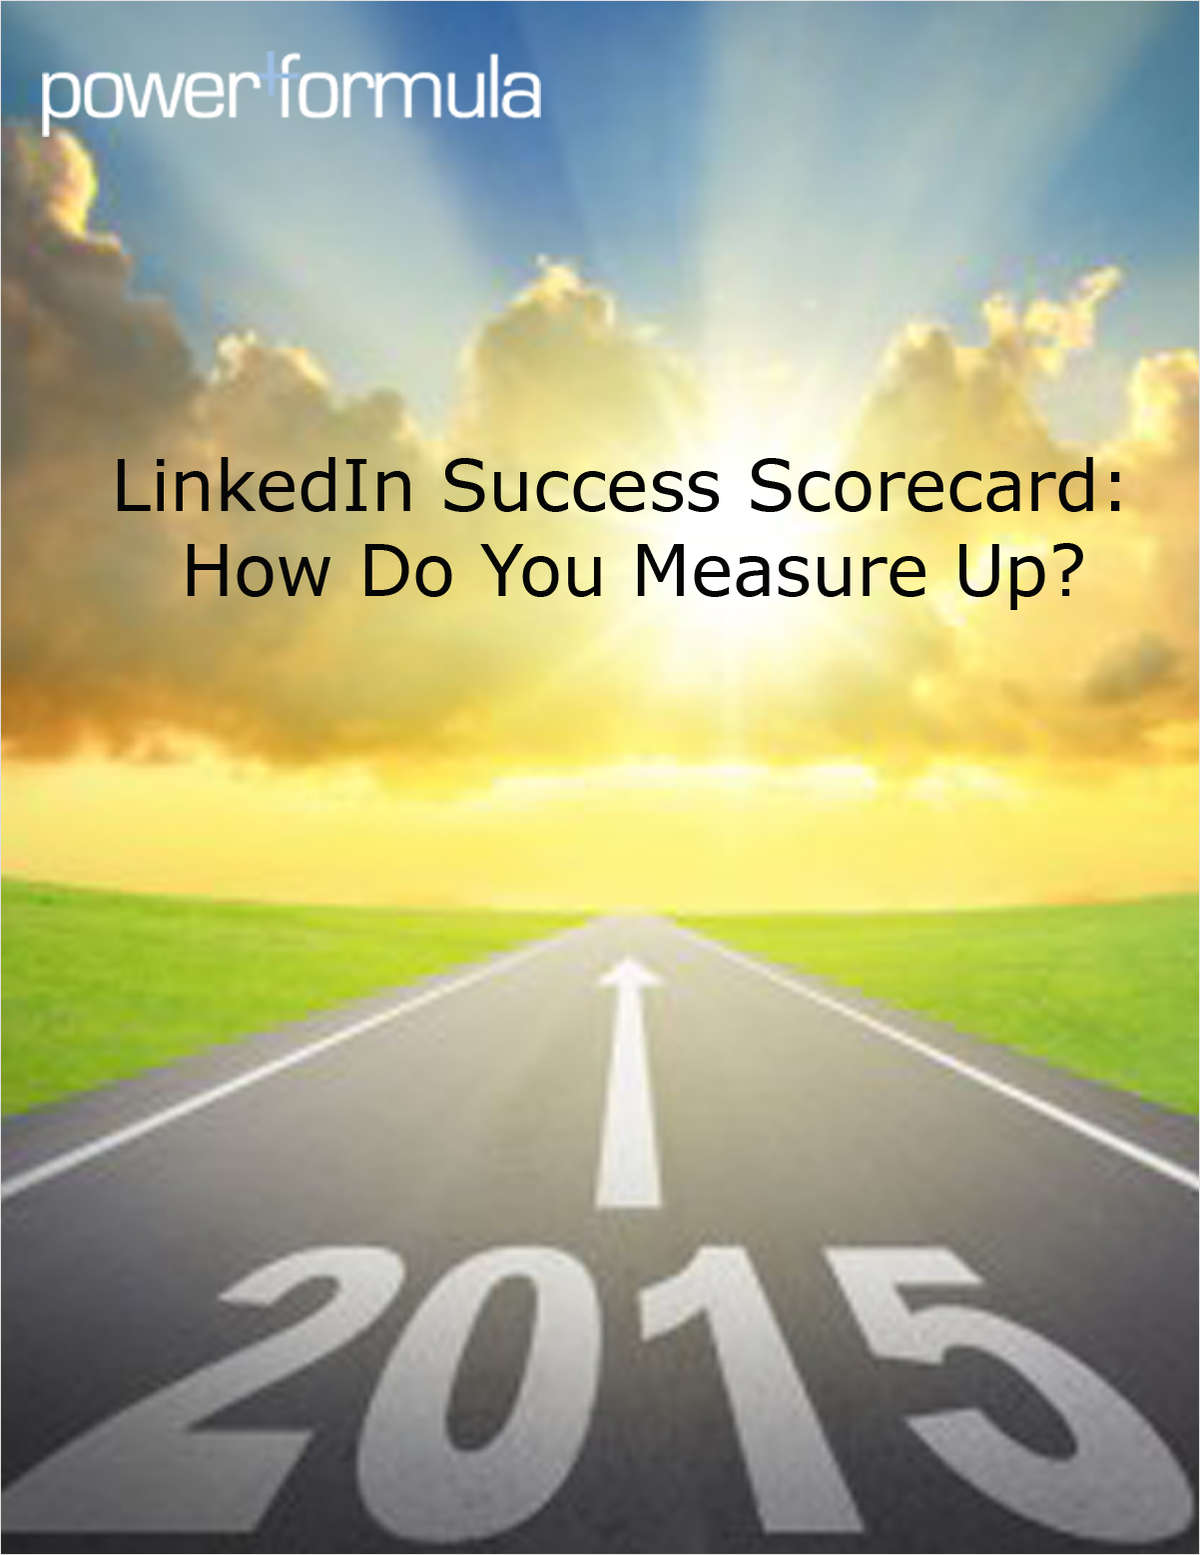 LinkedIn Success Scorecard: How Do You Measure Up?